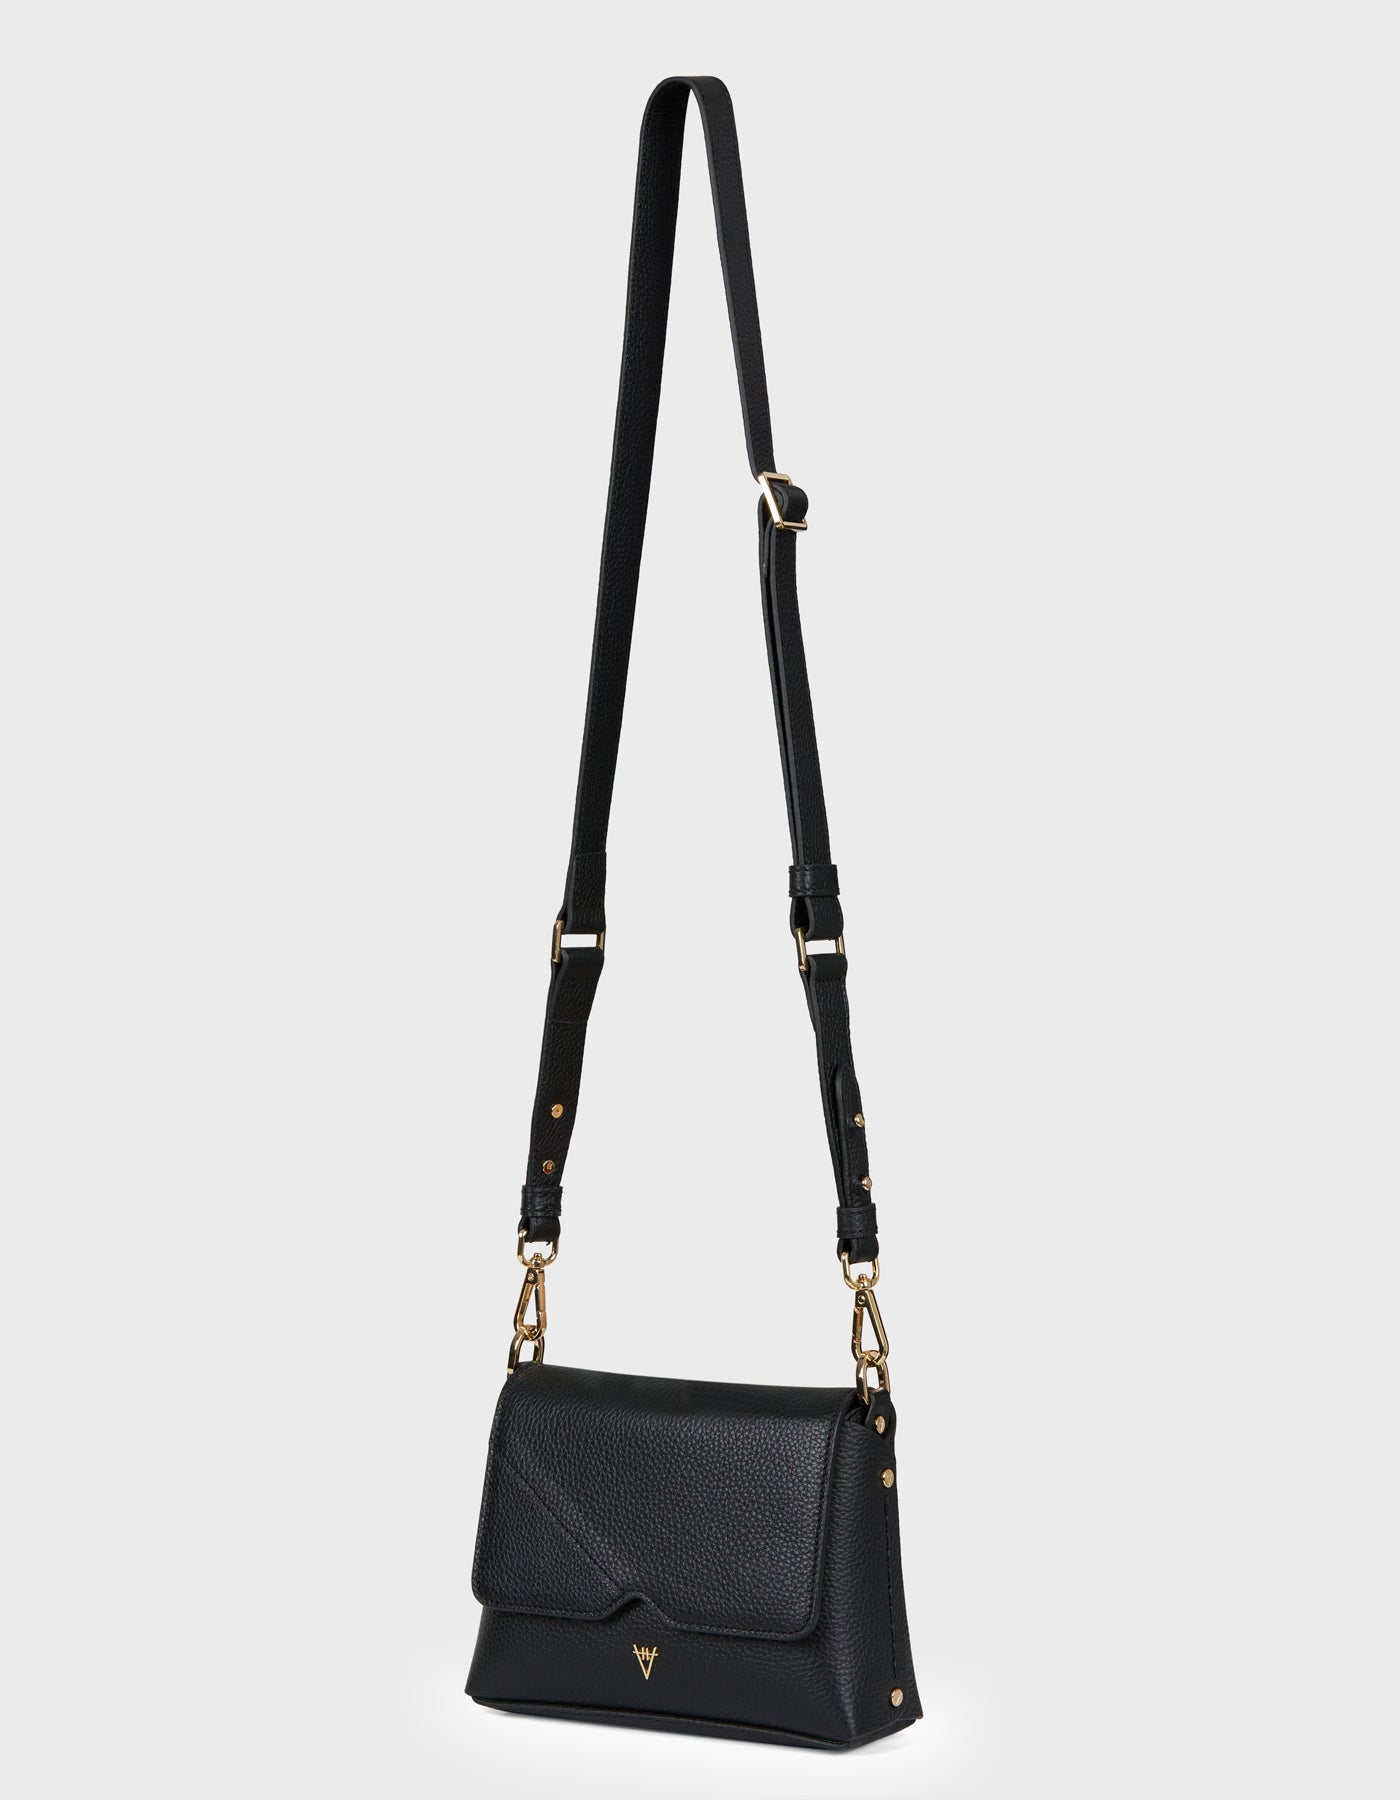 HiVa Atelier | Mini Mare Shoulder Bag Black | Beautiful and Versatile